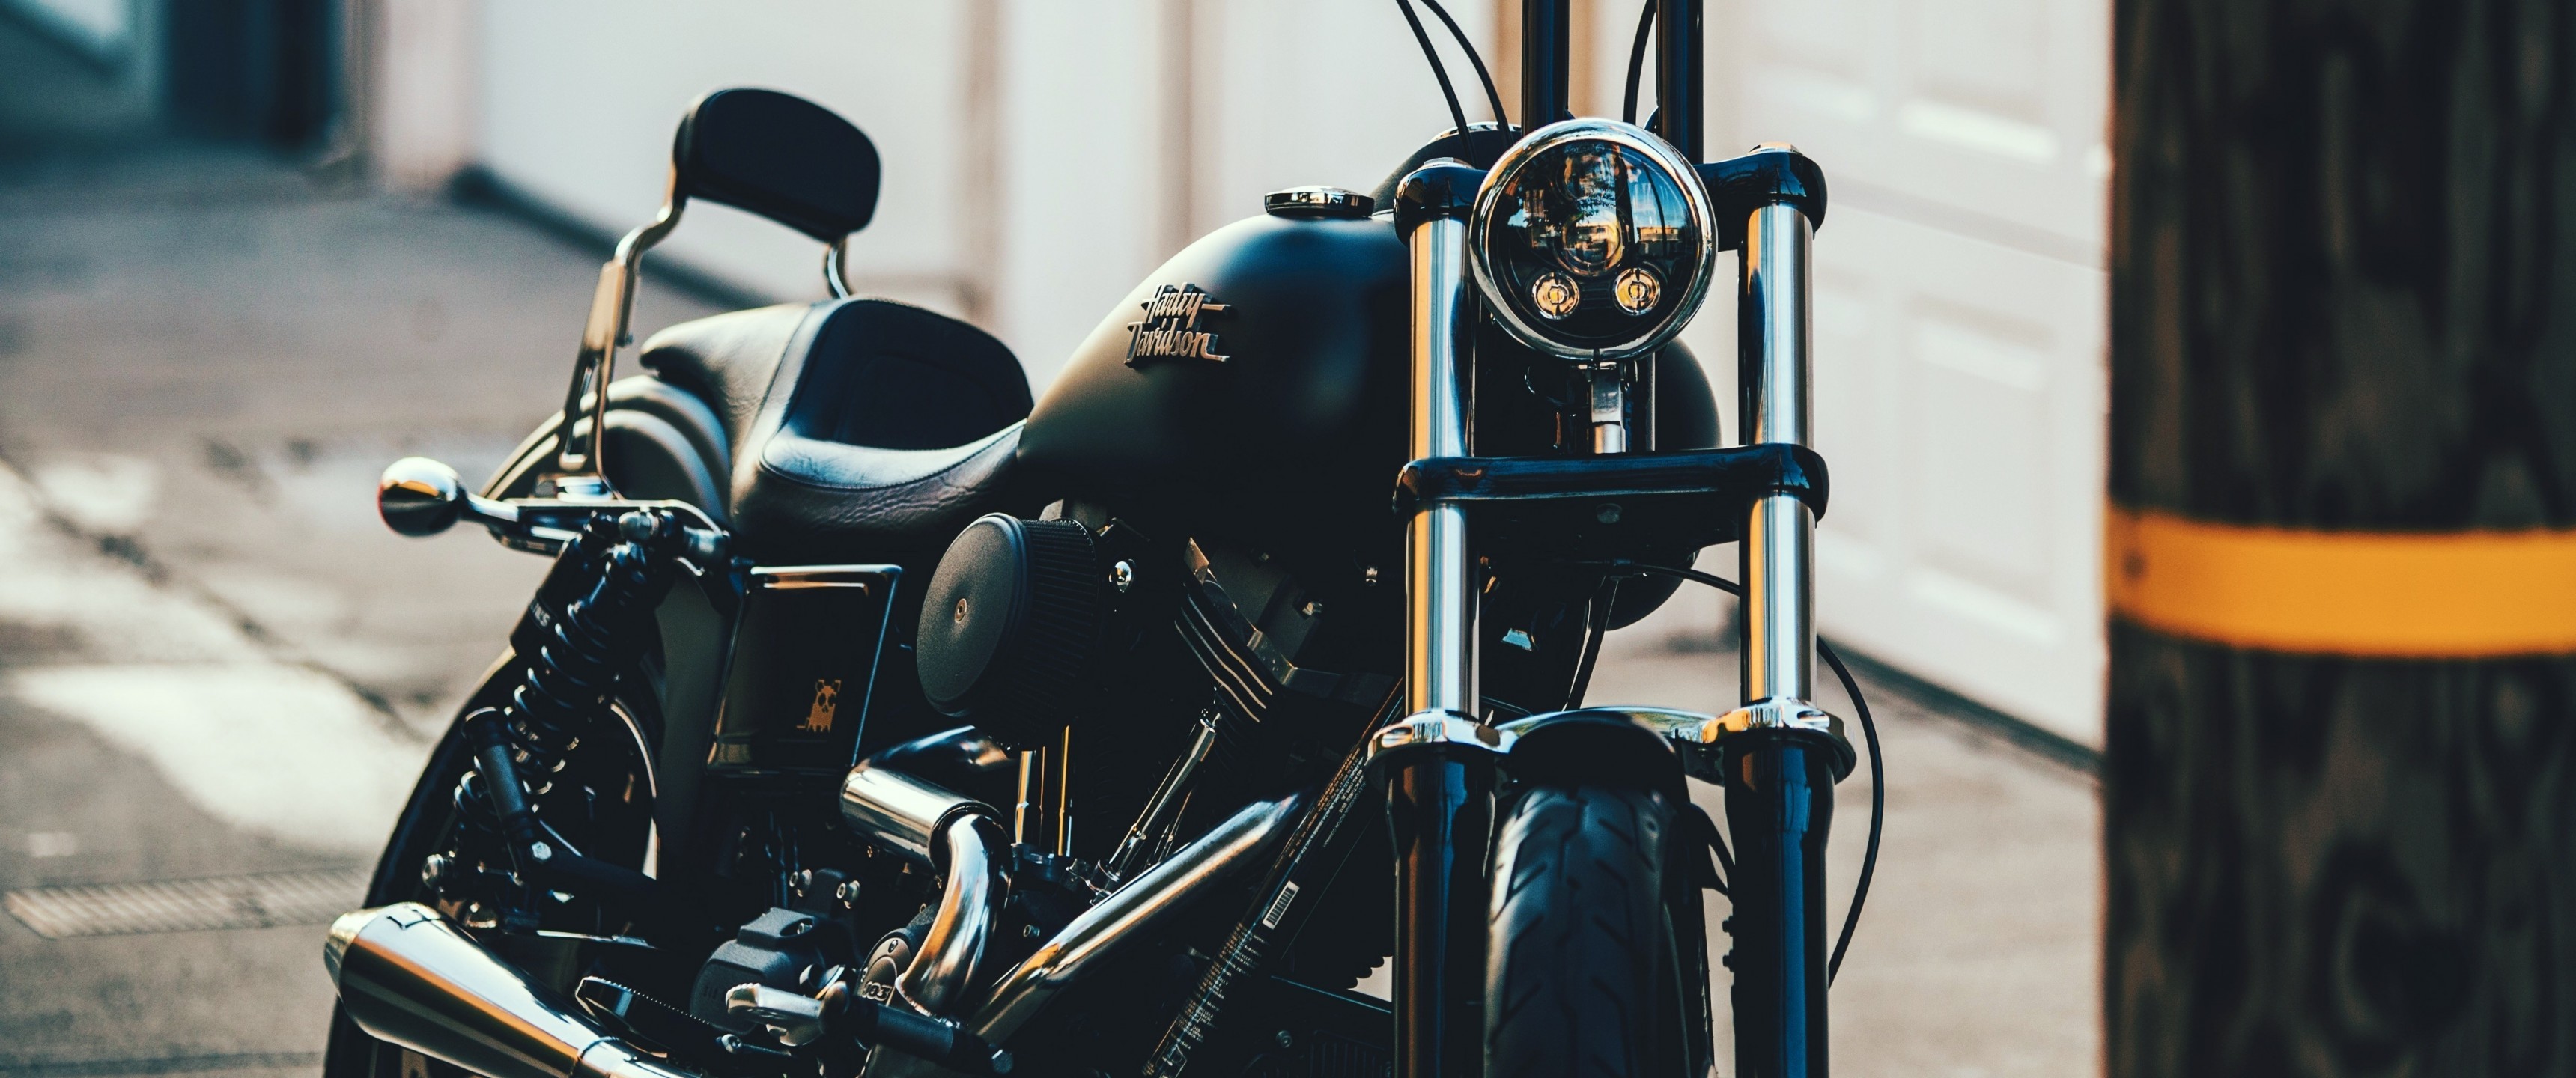 Harley Davidson, Black, Motorcycle - Phone Background Harley Davidson - HD Wallpaper 